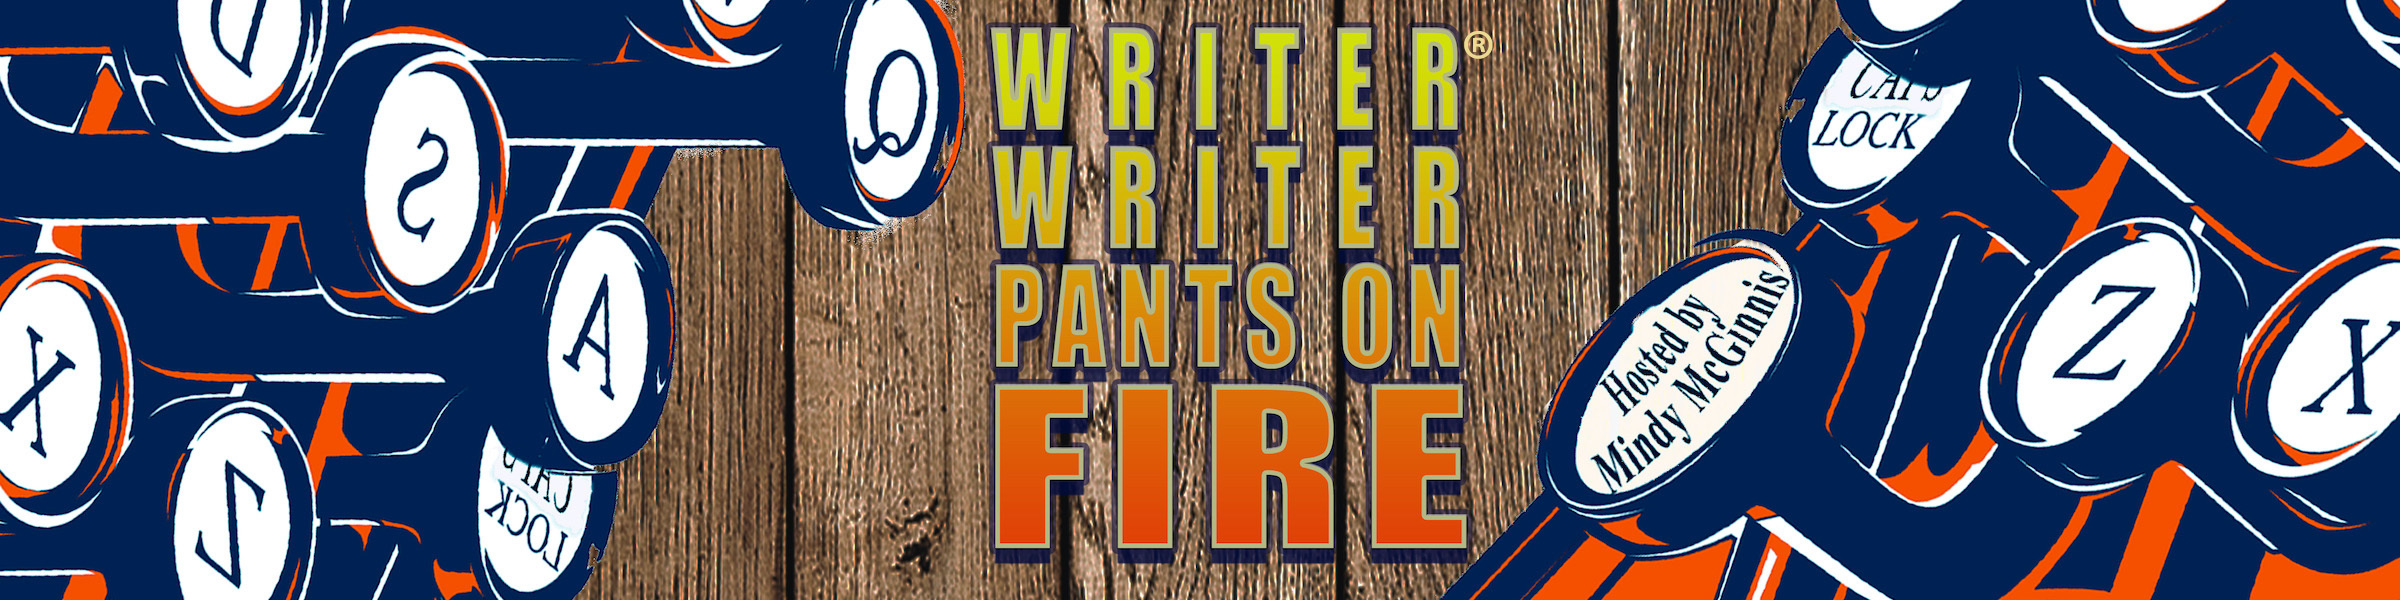 Writer, Writer, Pants On Fire